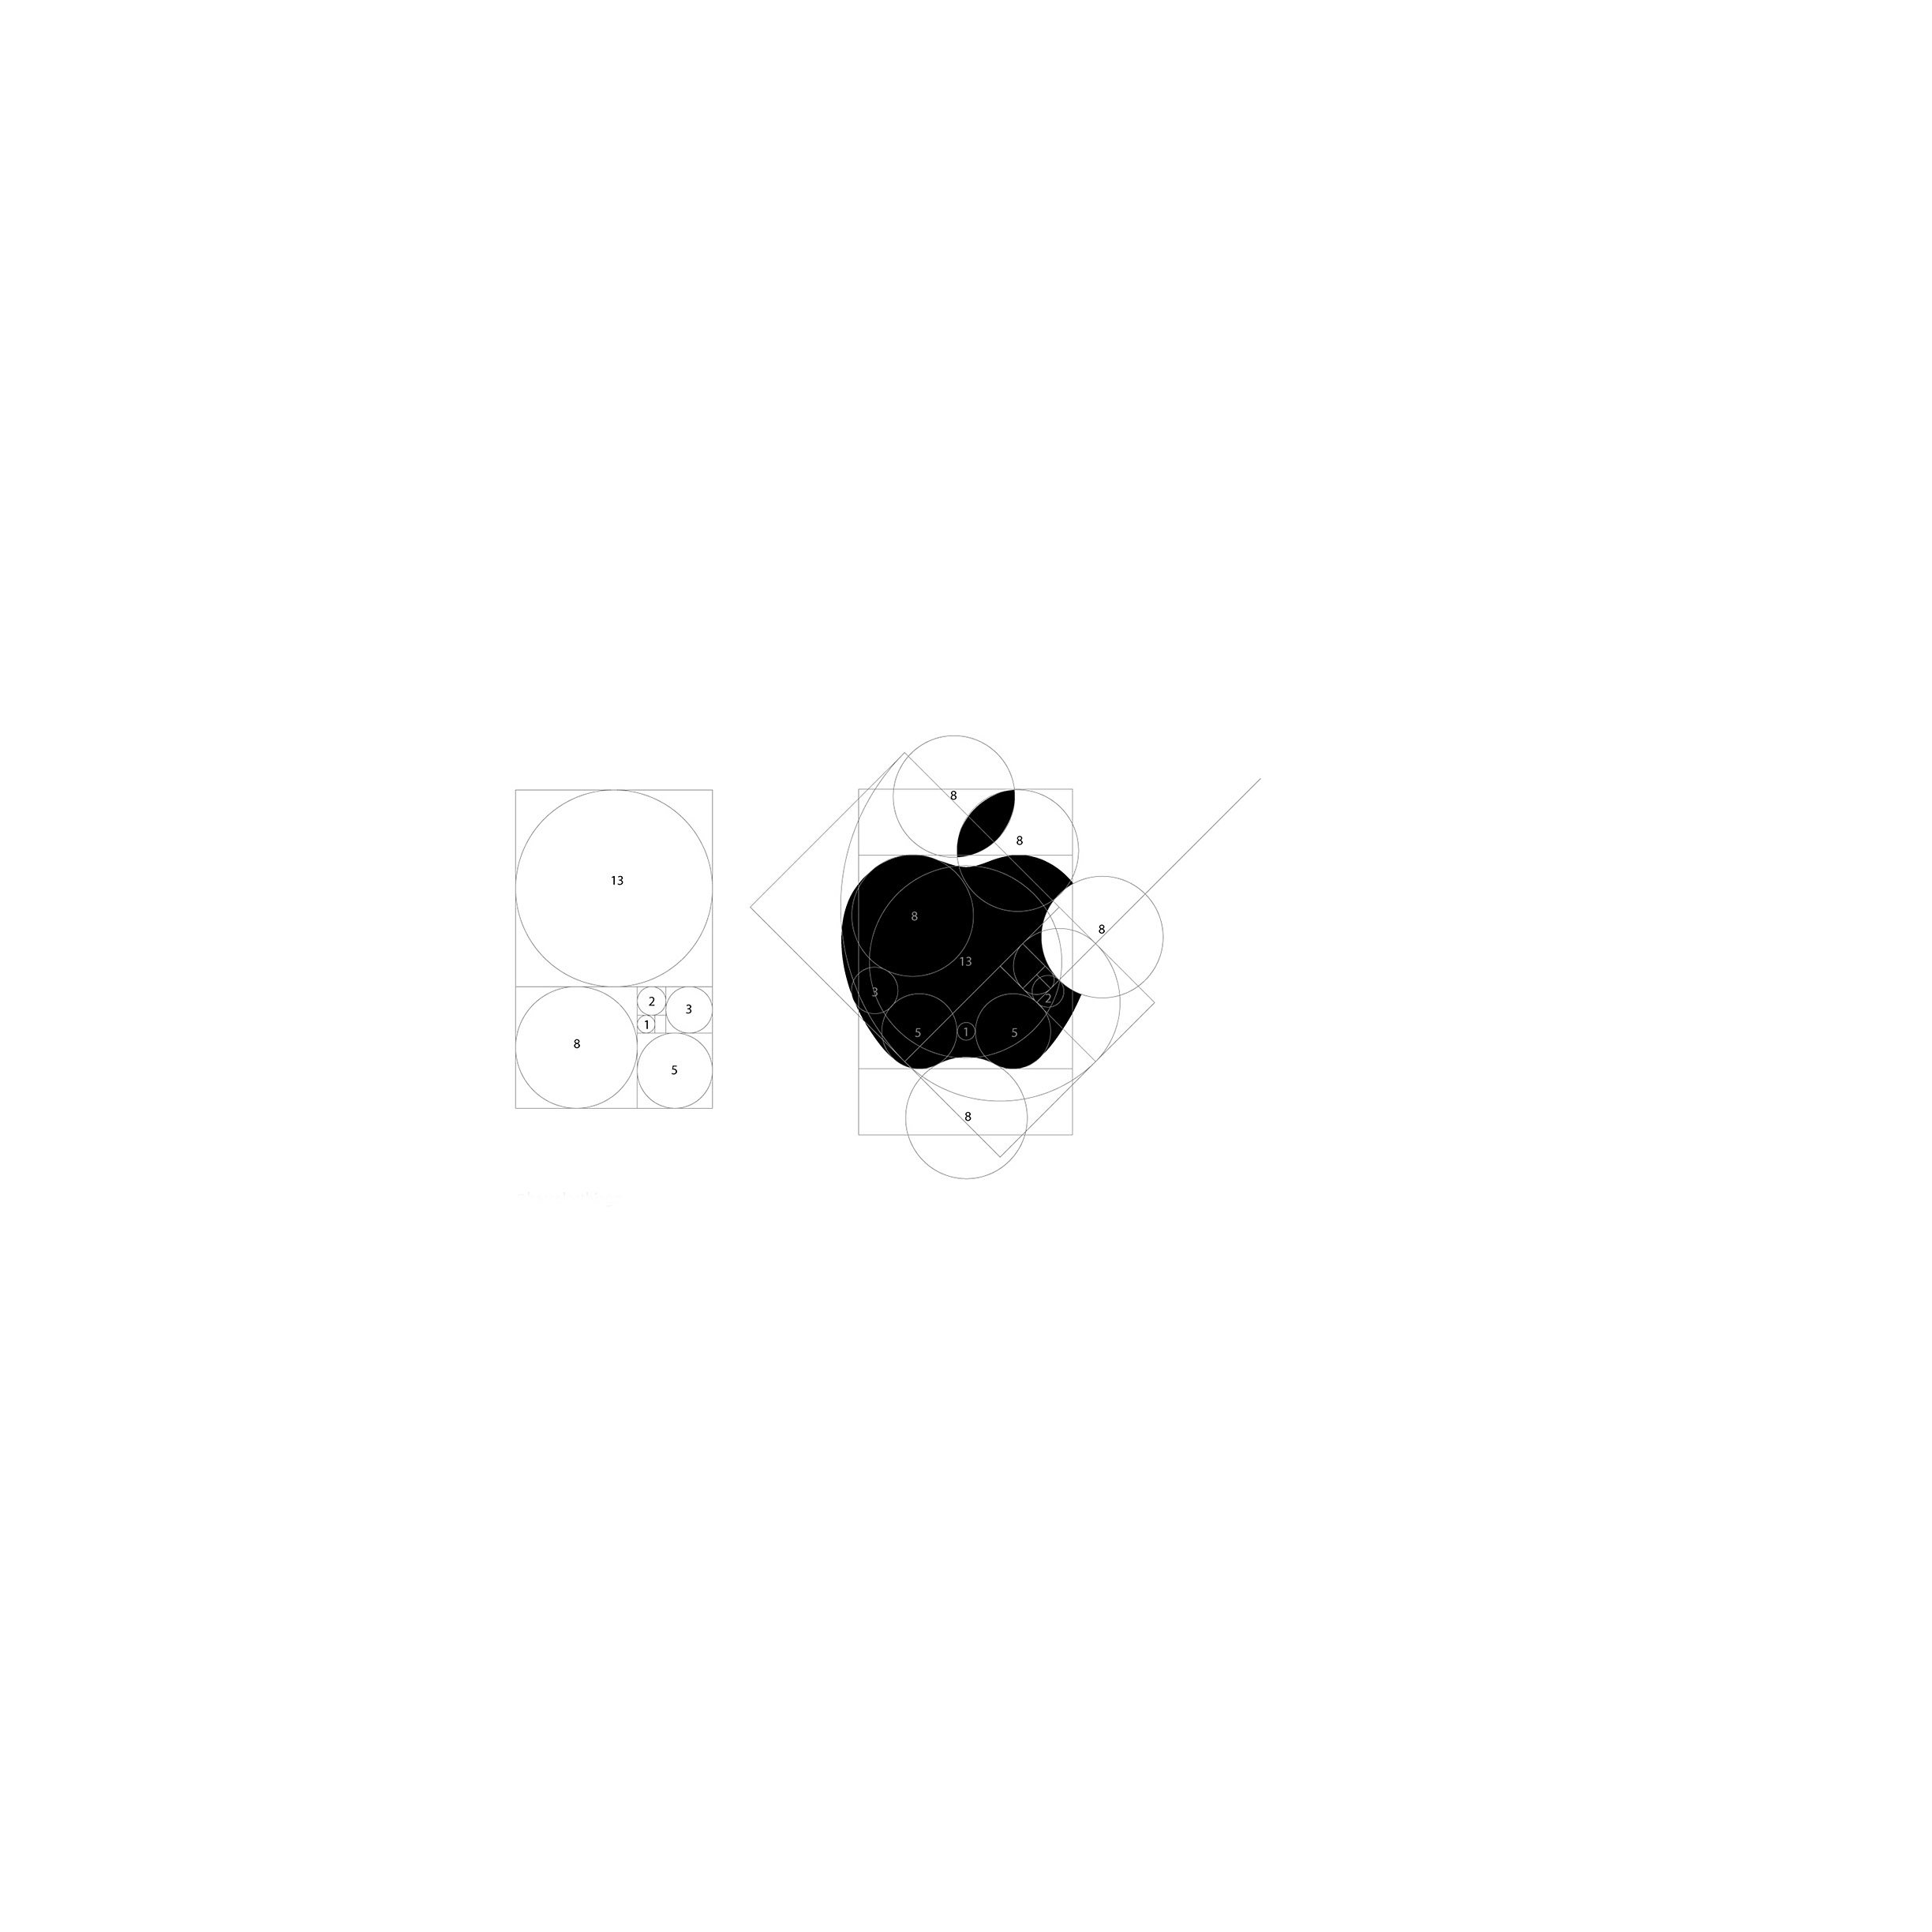 Ios7 Apple Golden Ratio Parallax HD iPhone iPad Wallpaper